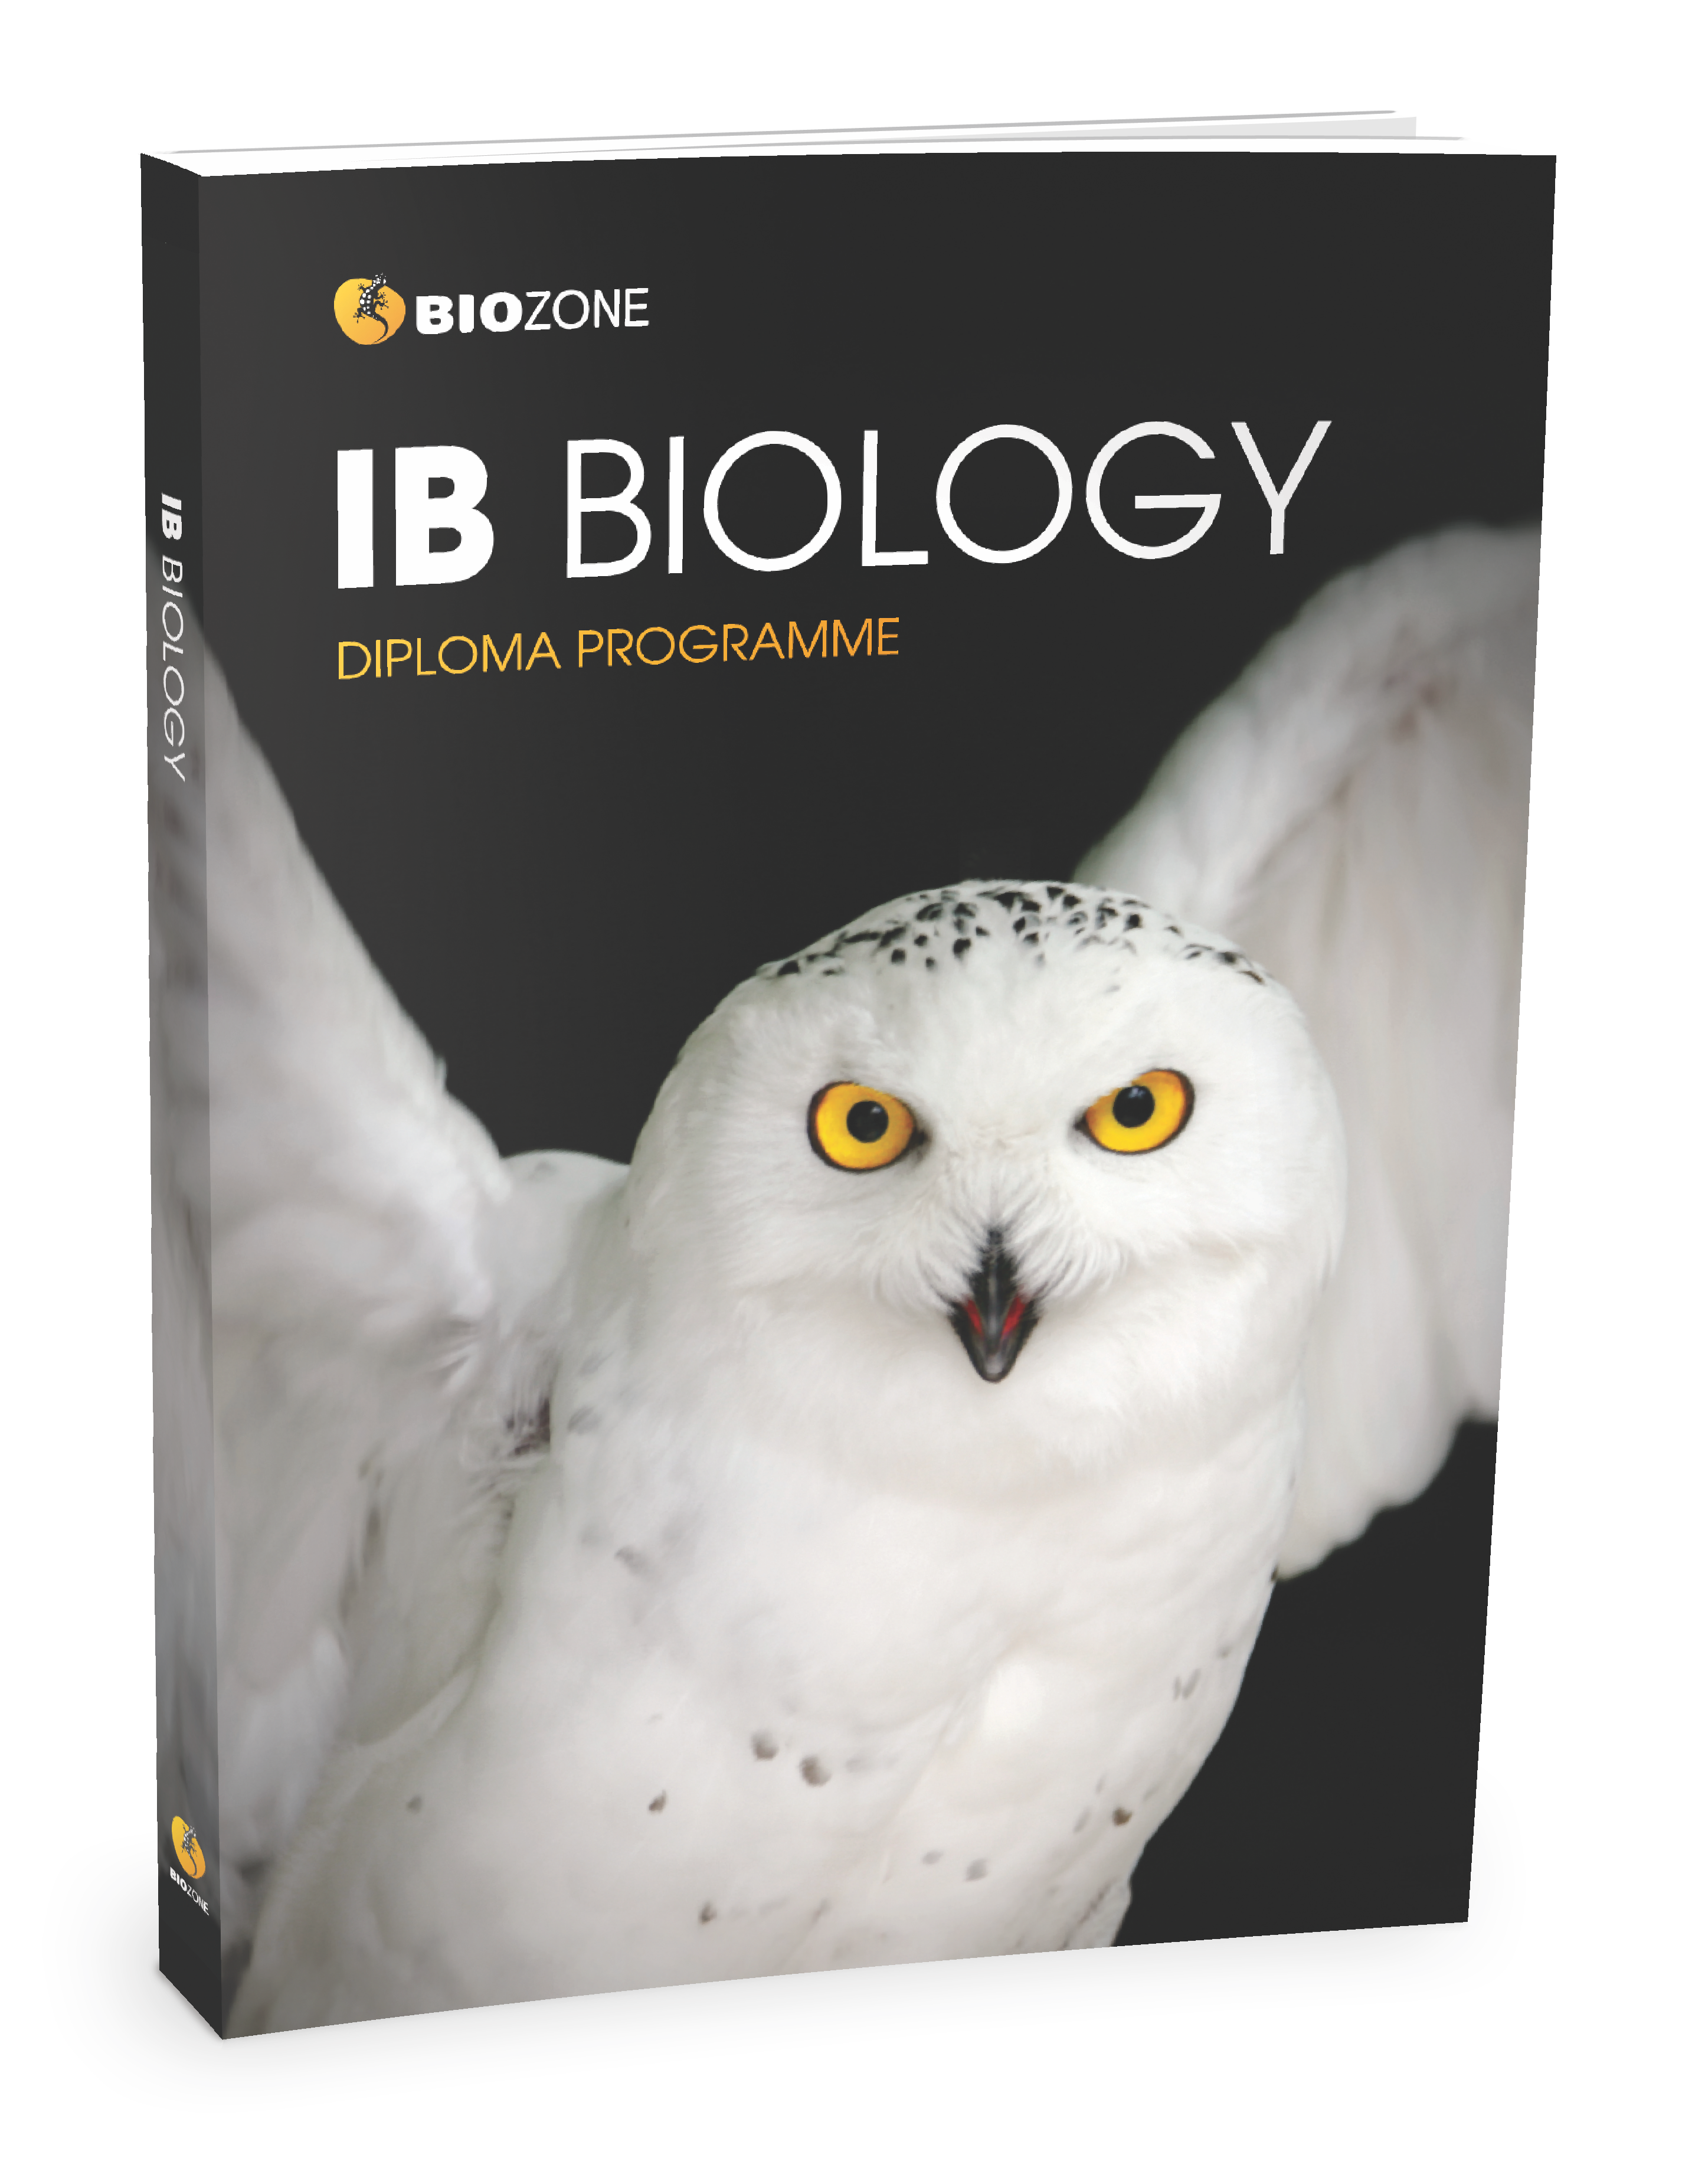 Ib Biology